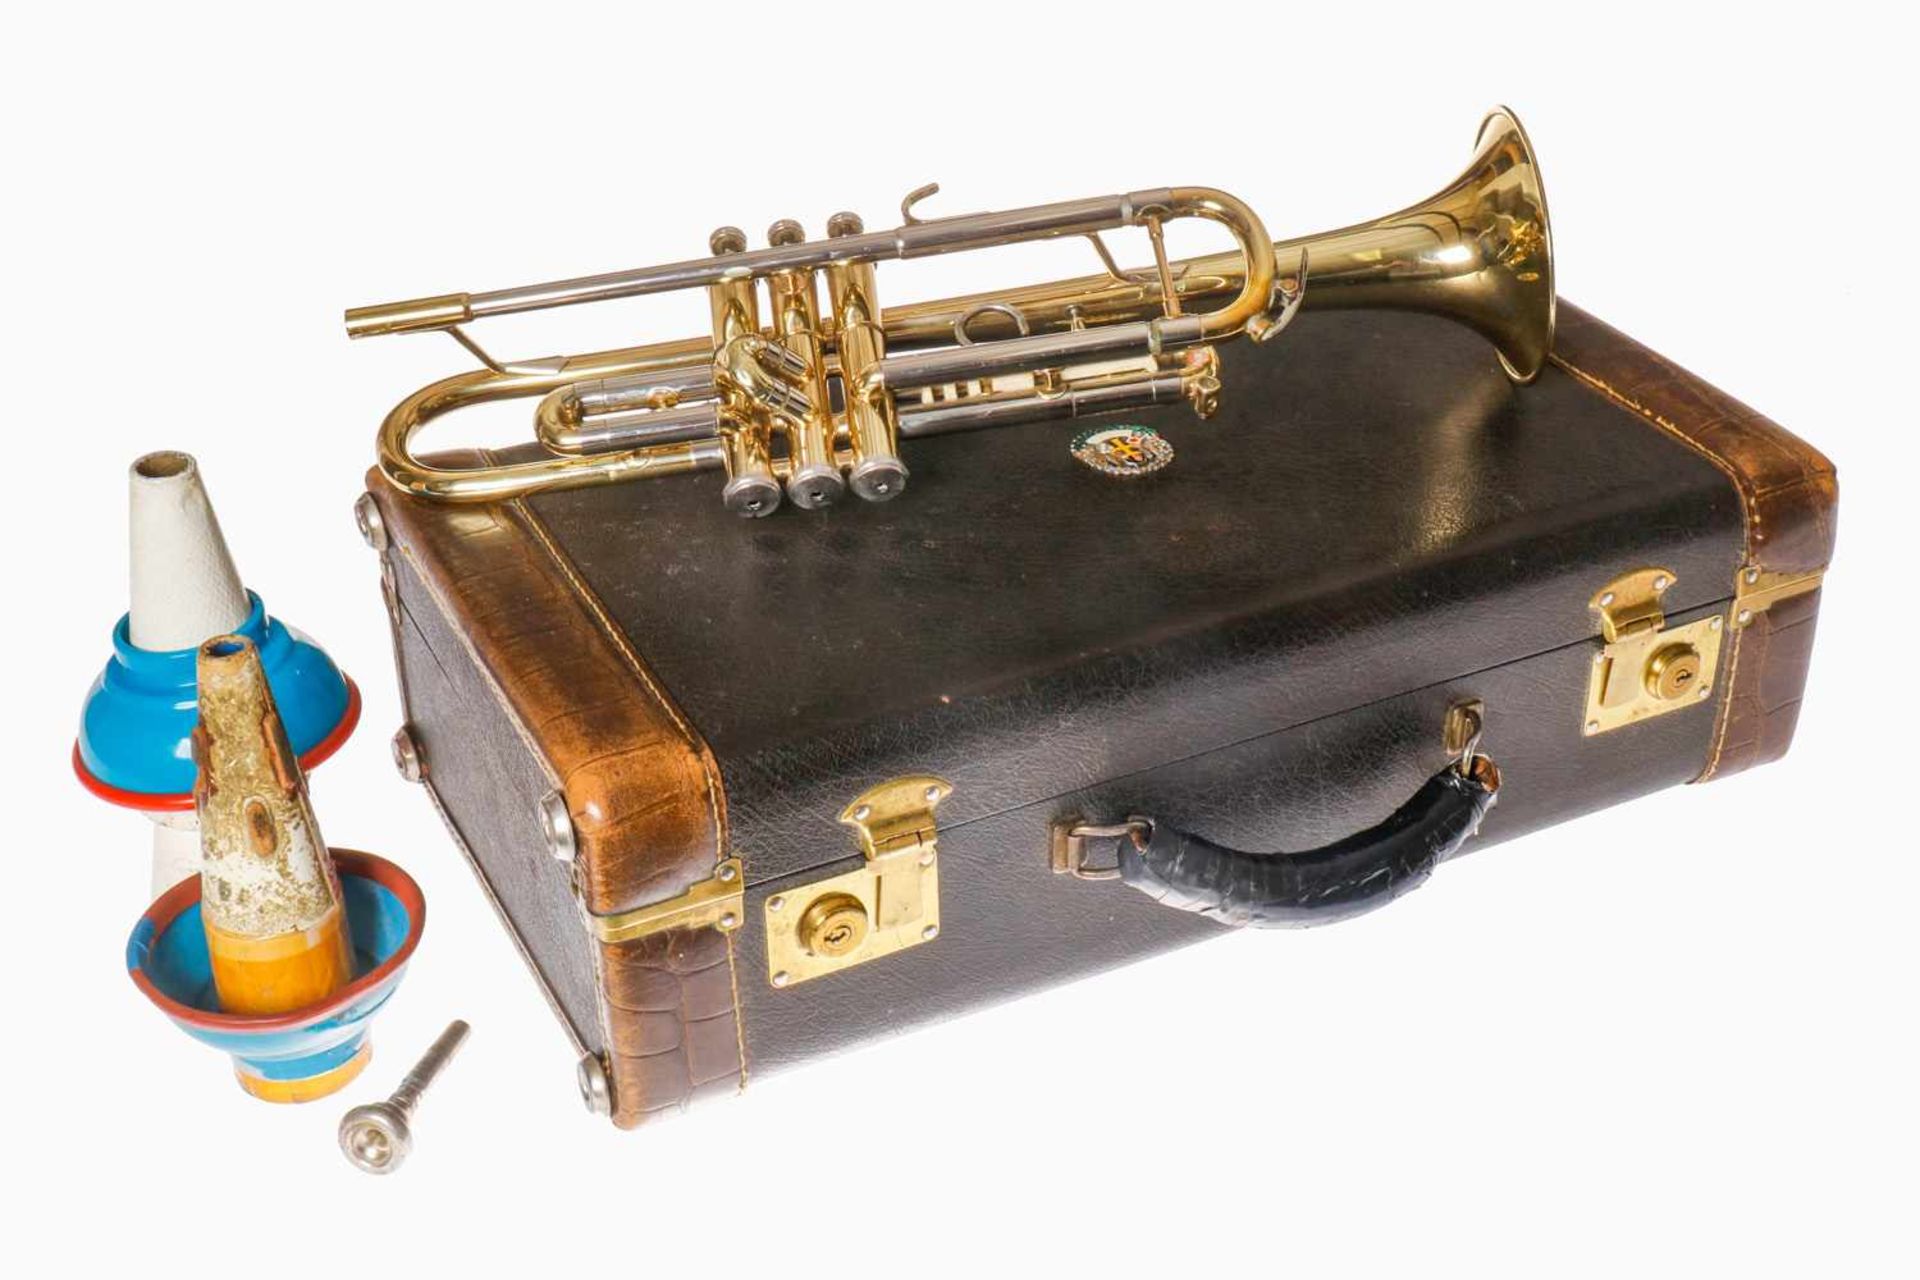 Getzen Trompete "Capri", Nr. A 44066, mit Perlmutt-Ventil-Drückern, dazu Original-Koffer mit - Image 2 of 7